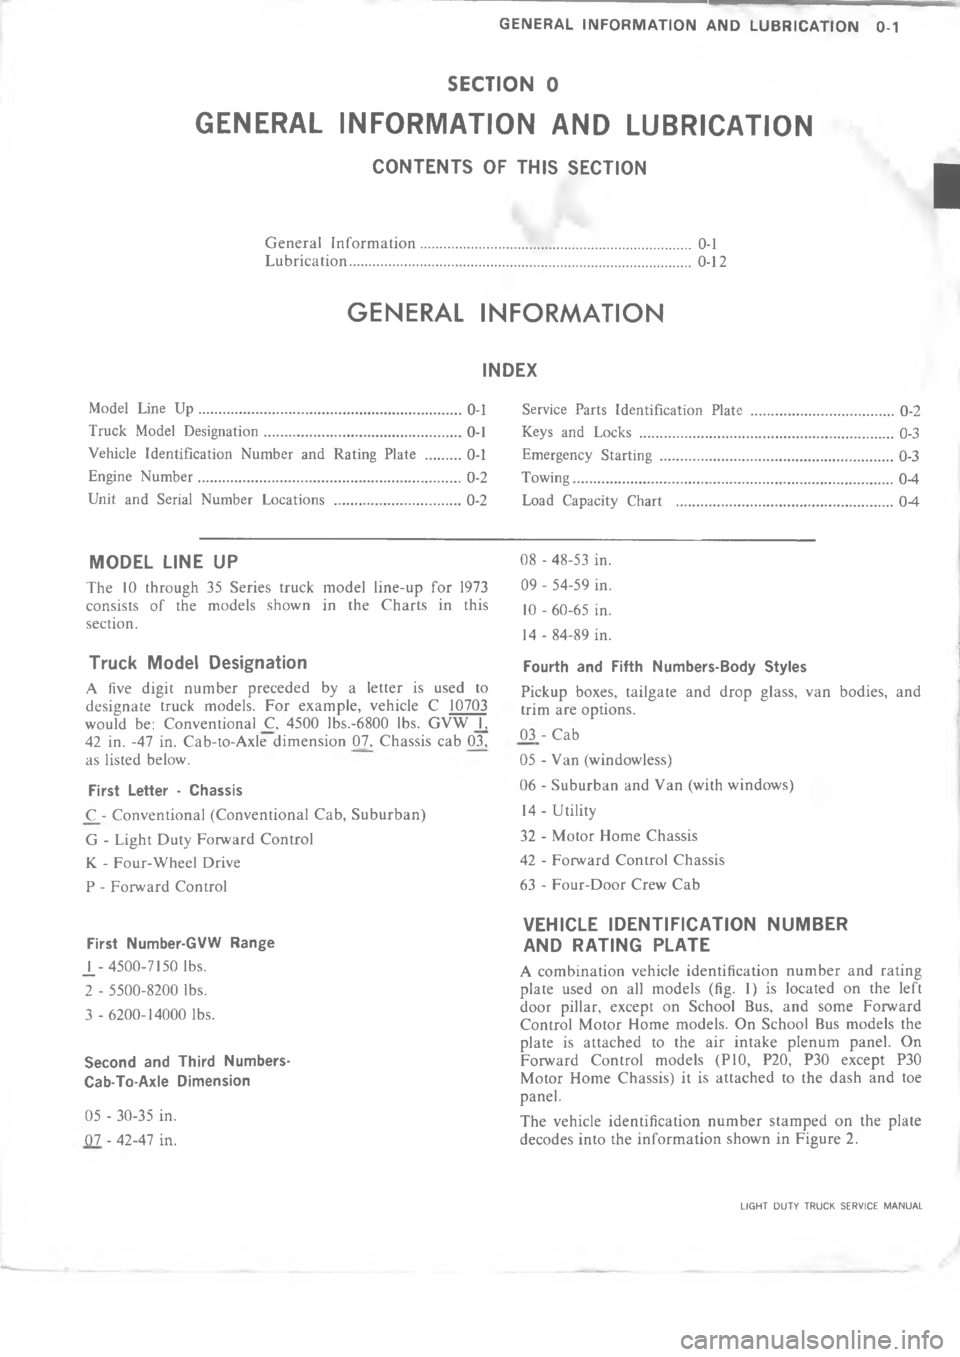 CHEVROLET LIGHT DUTY TRUCK 1973  Service Manual               











"

\)

-

-
"/


/

"

!
 
4

.
/
